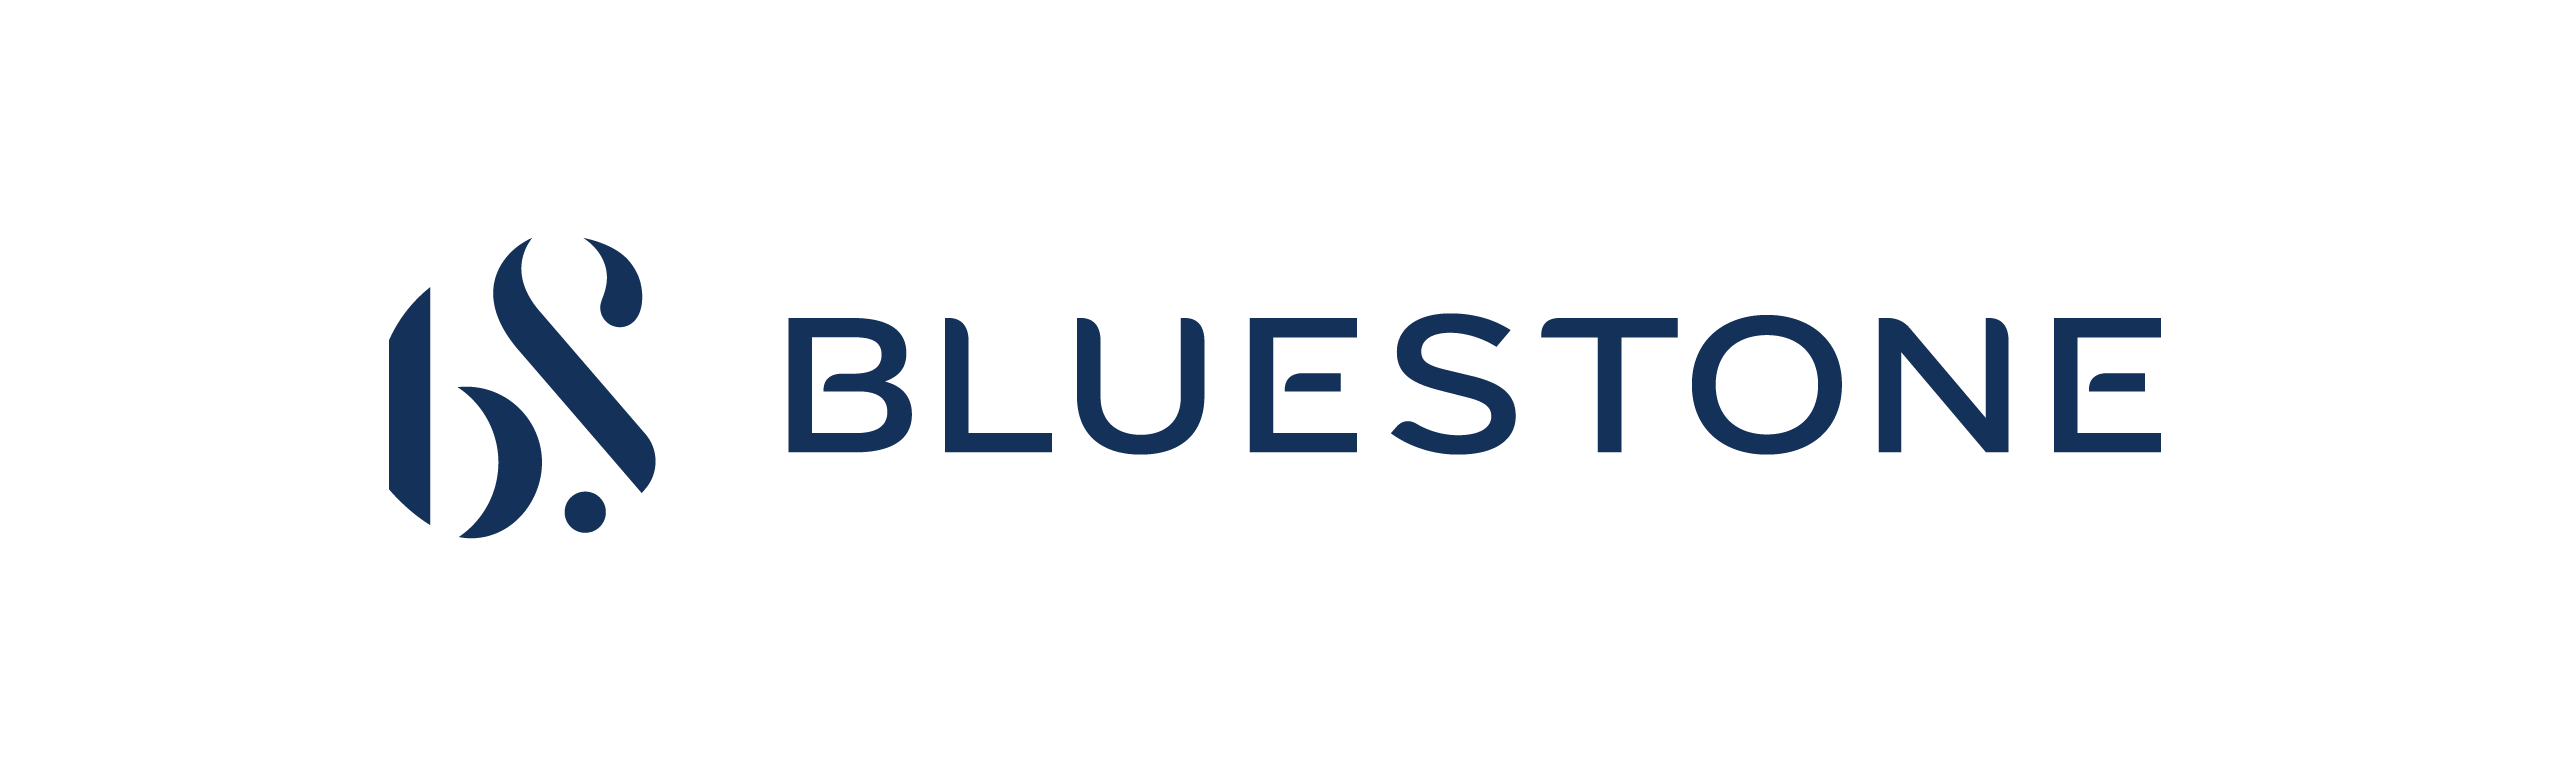 Bluestone logo image